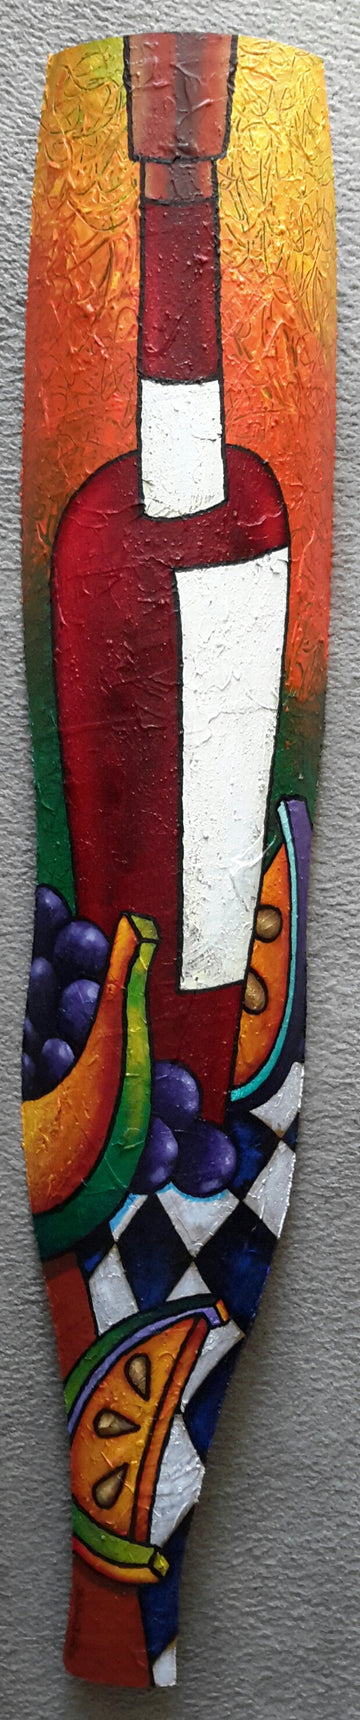 Wine and Fruit #3 Acrylic Paint on Board Art Original